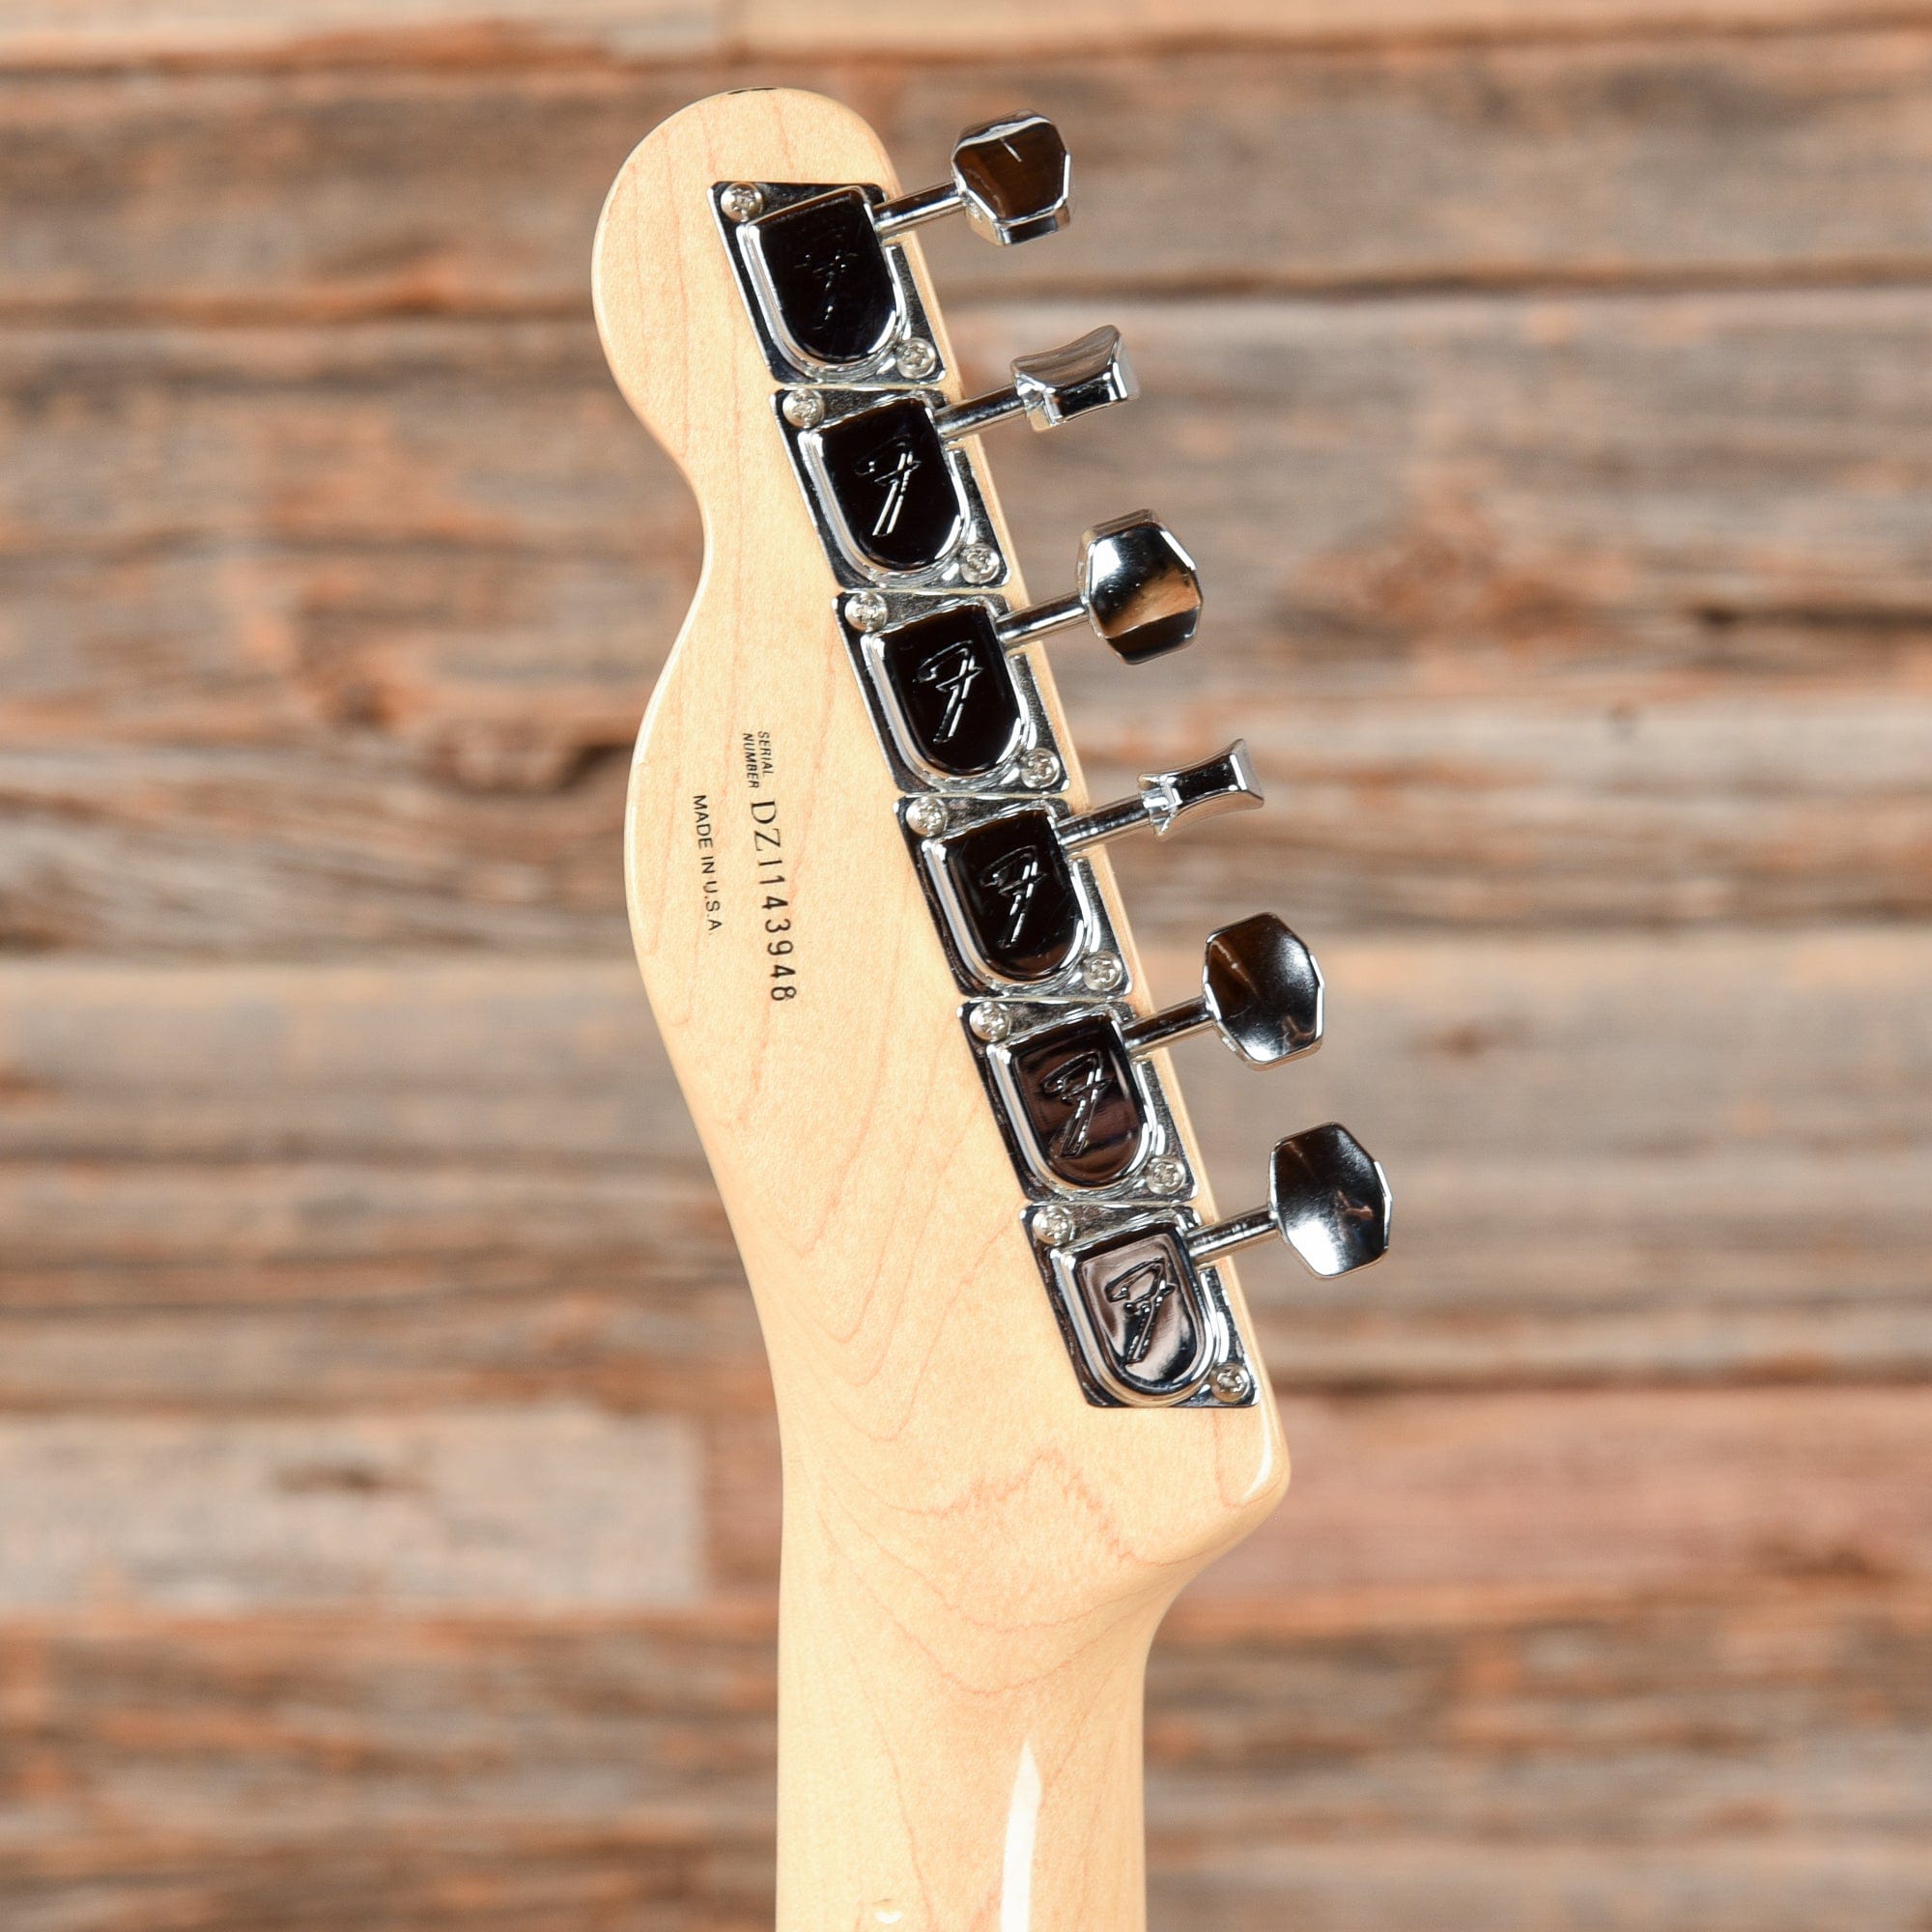 Fender Telecaster Thinline White Blonde 2001 Electric Guitars / Semi-Hollow